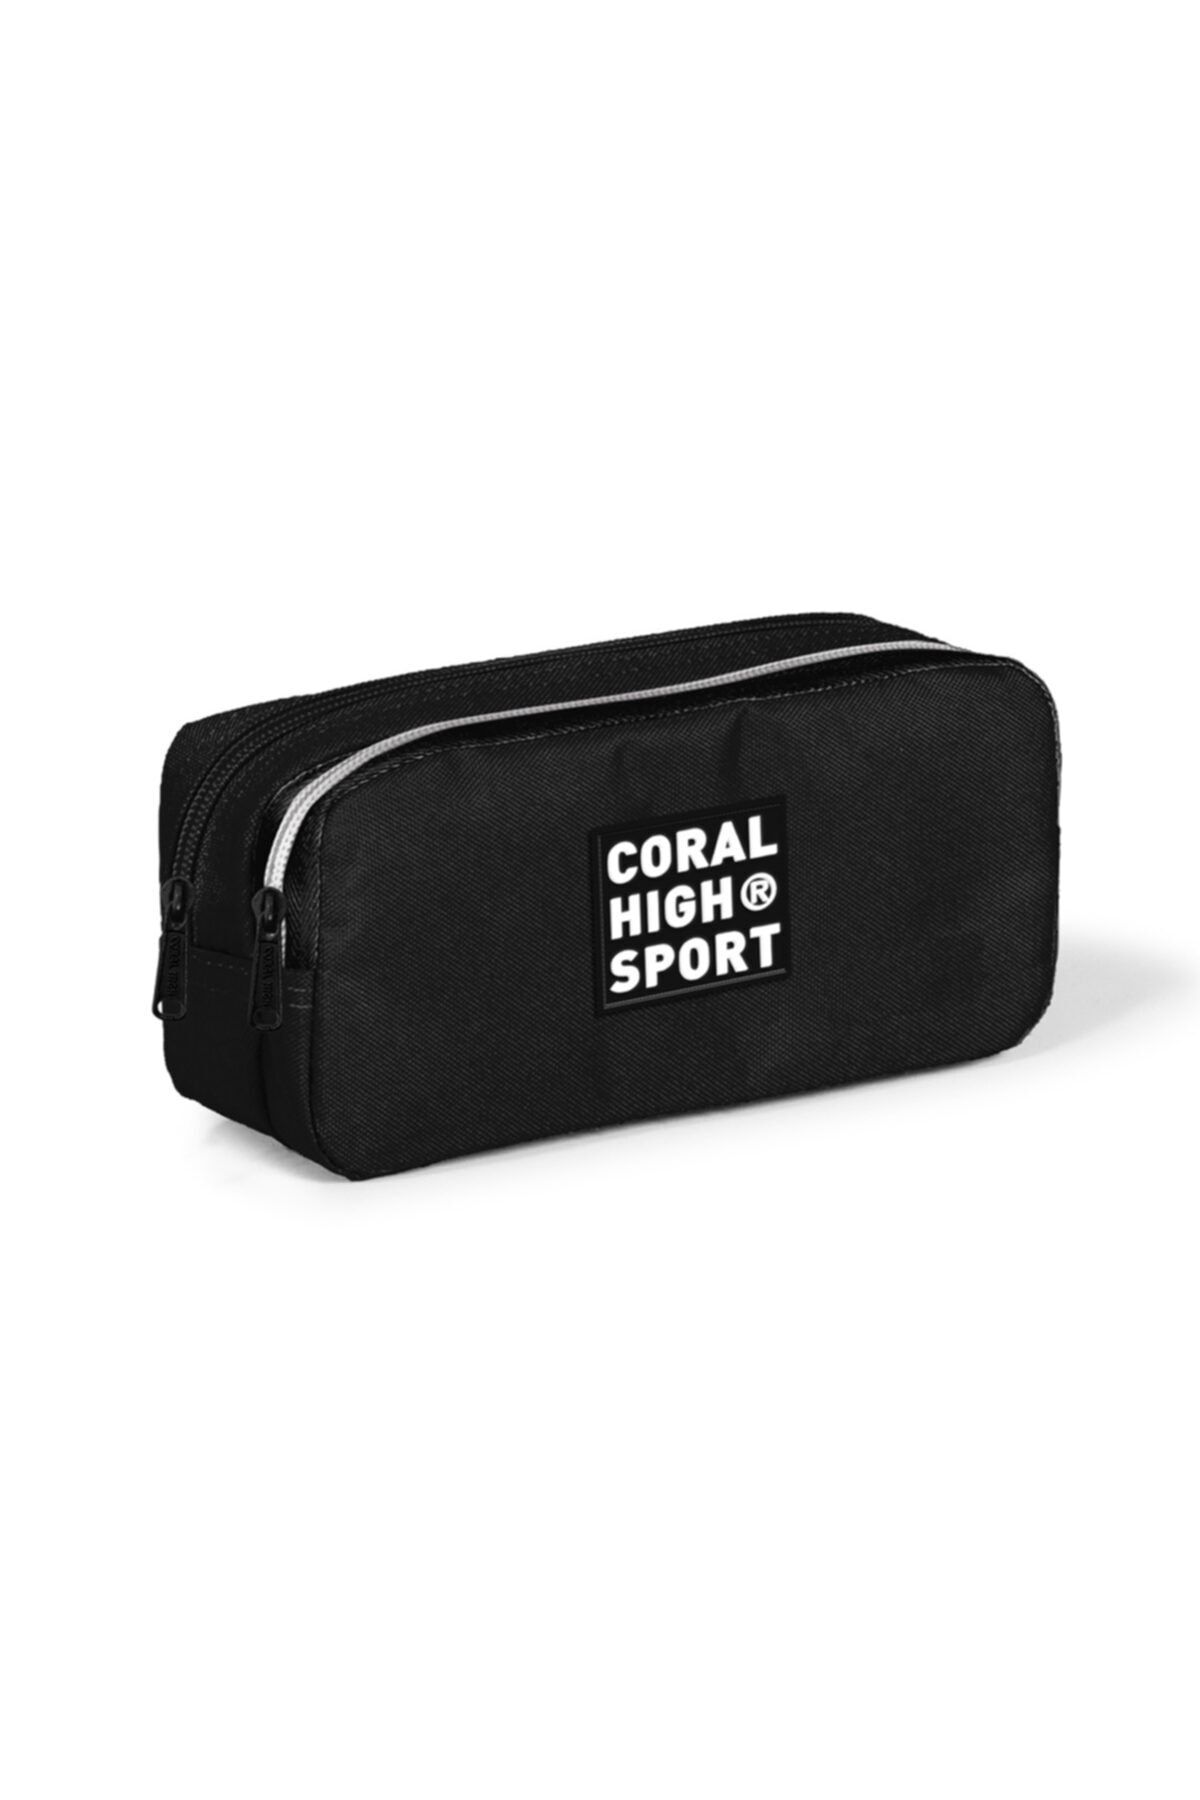 Coral High Sport Siyah Iki Bölmeli Kalem Çantası 22261